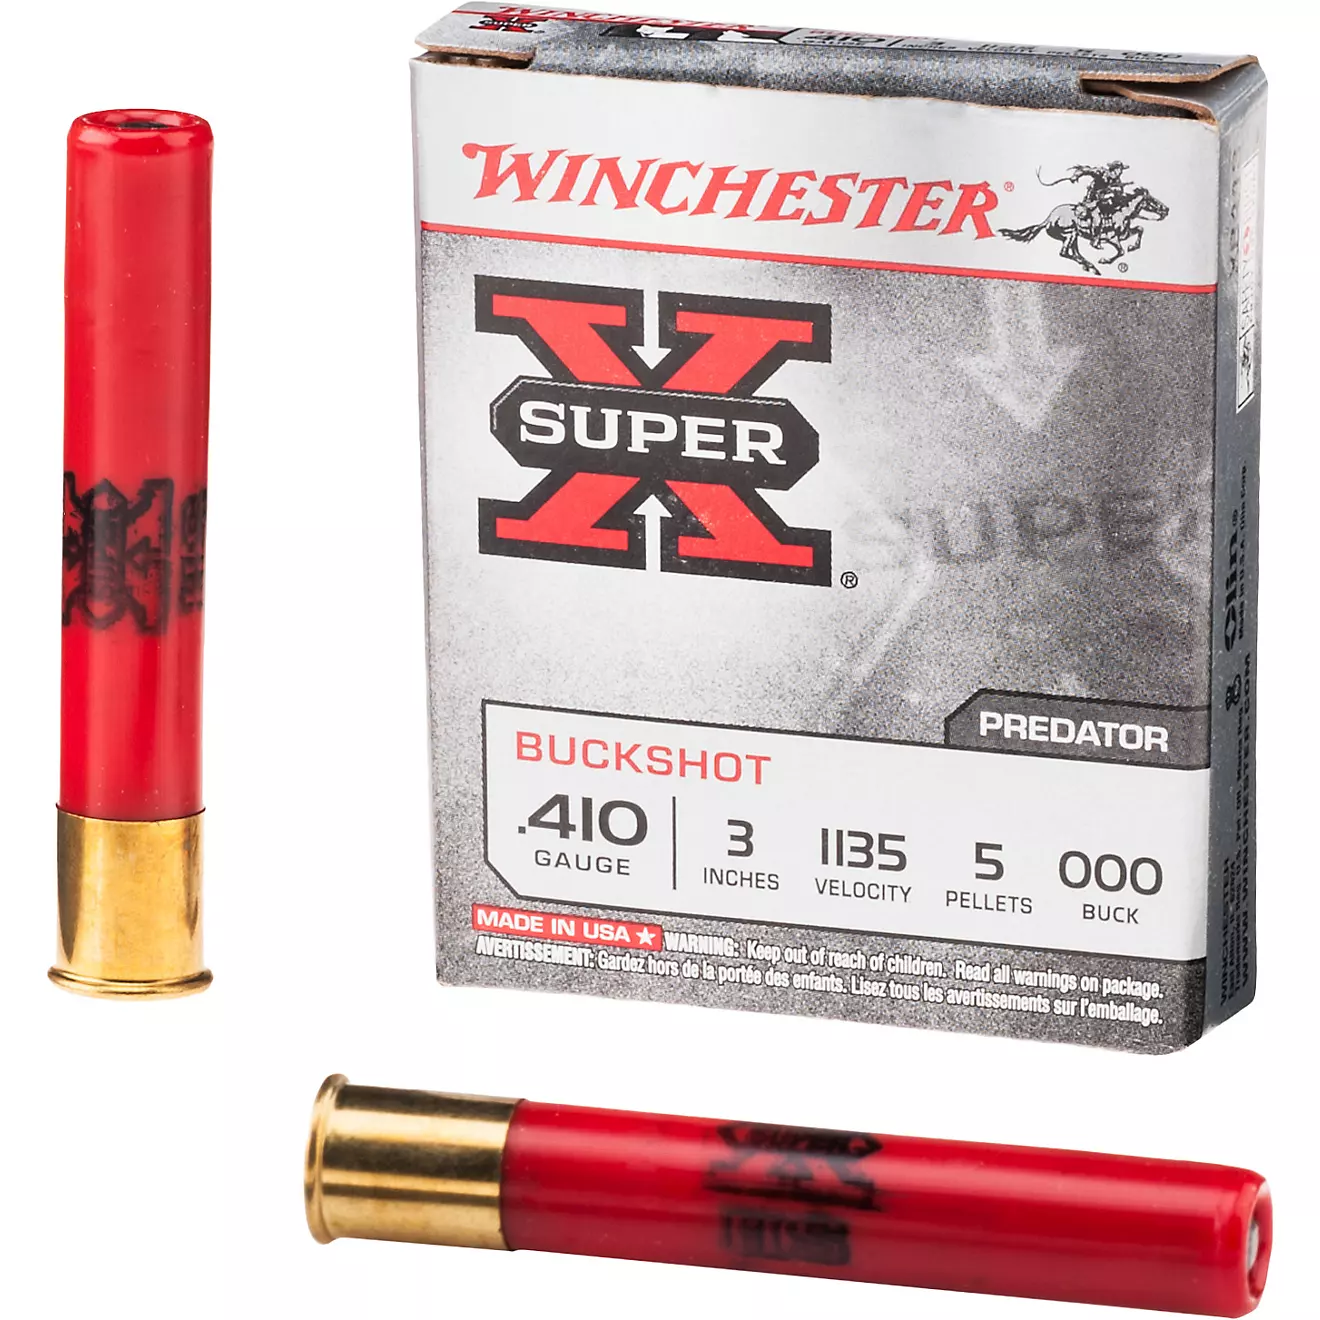 Winchester 410 Ammo – 5 Rounds of 000 Buck Ammunition - Ammunition